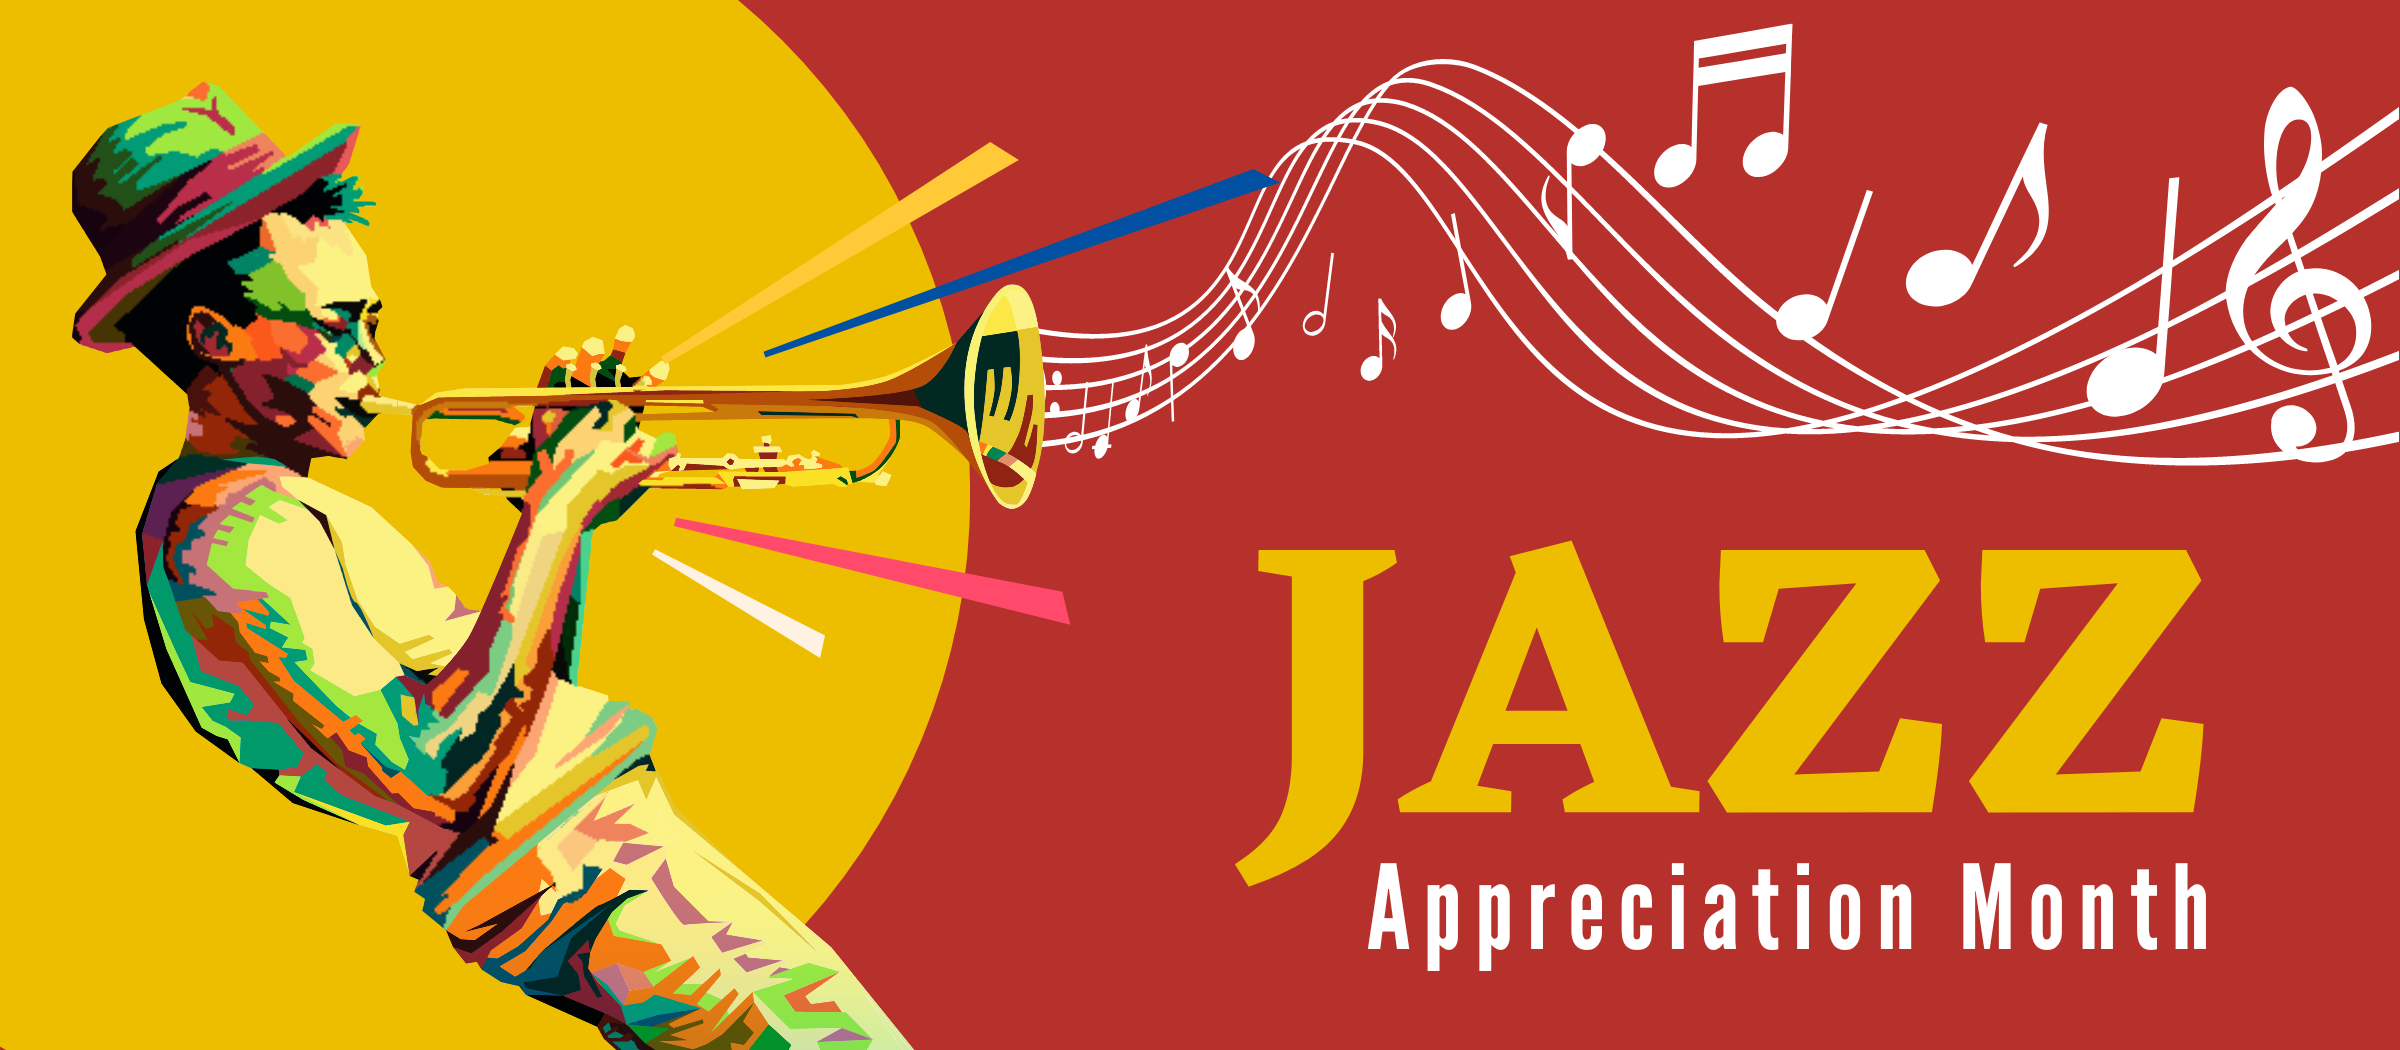 It’s Jazz Appreciation Month